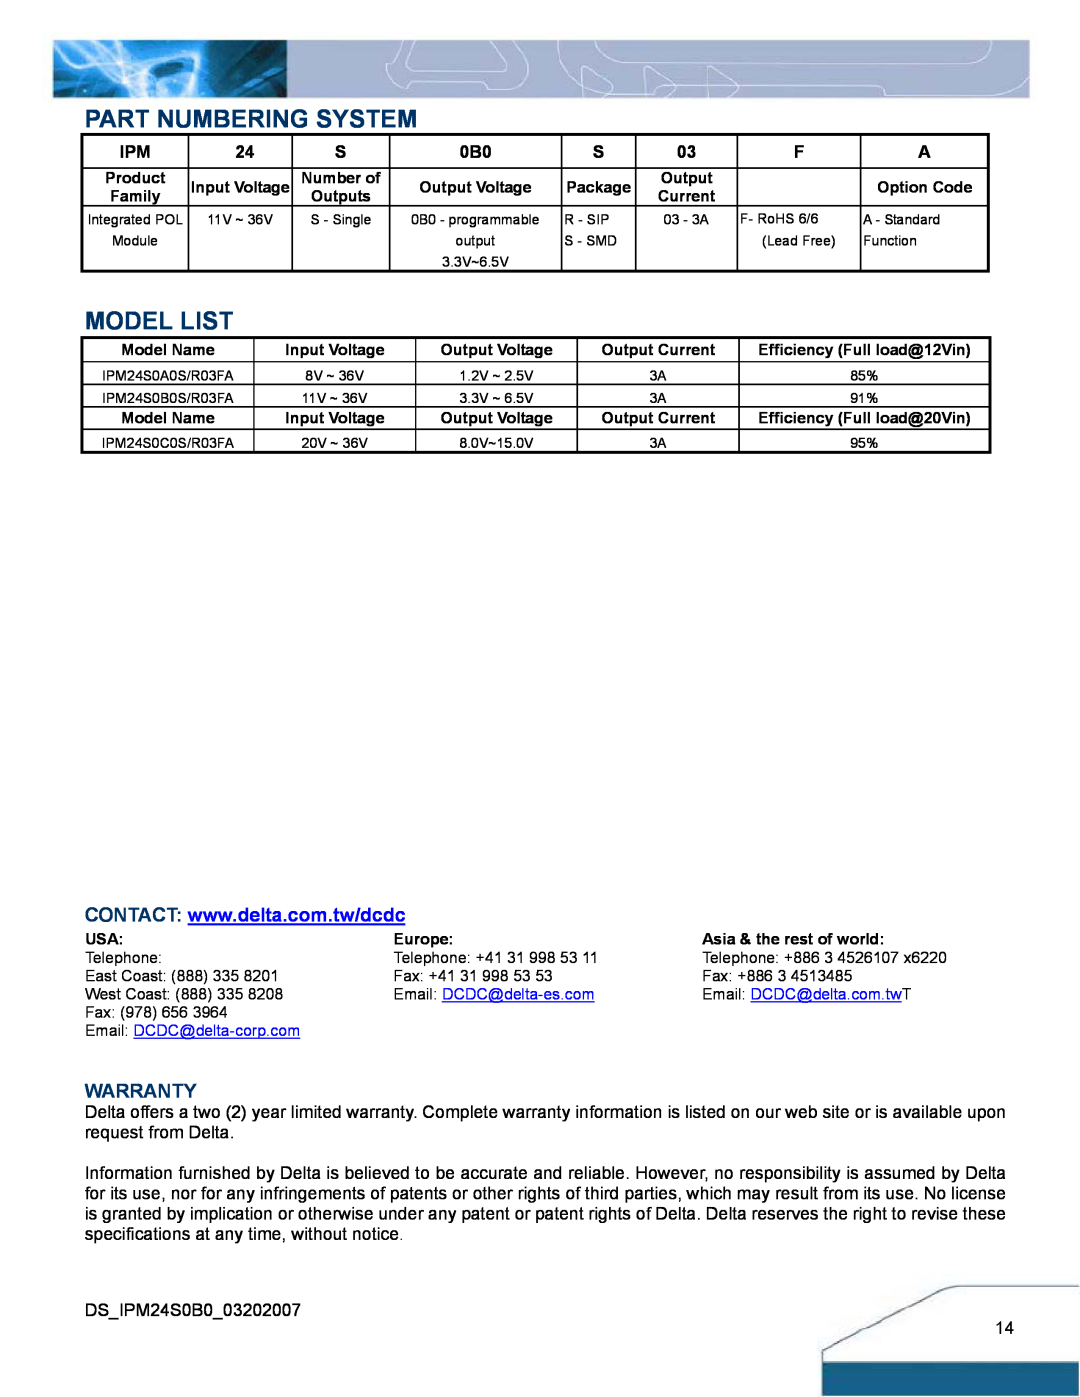 Delta Electronics IPM24S0B0 manual Part Numbering System, Model List, Warranty 